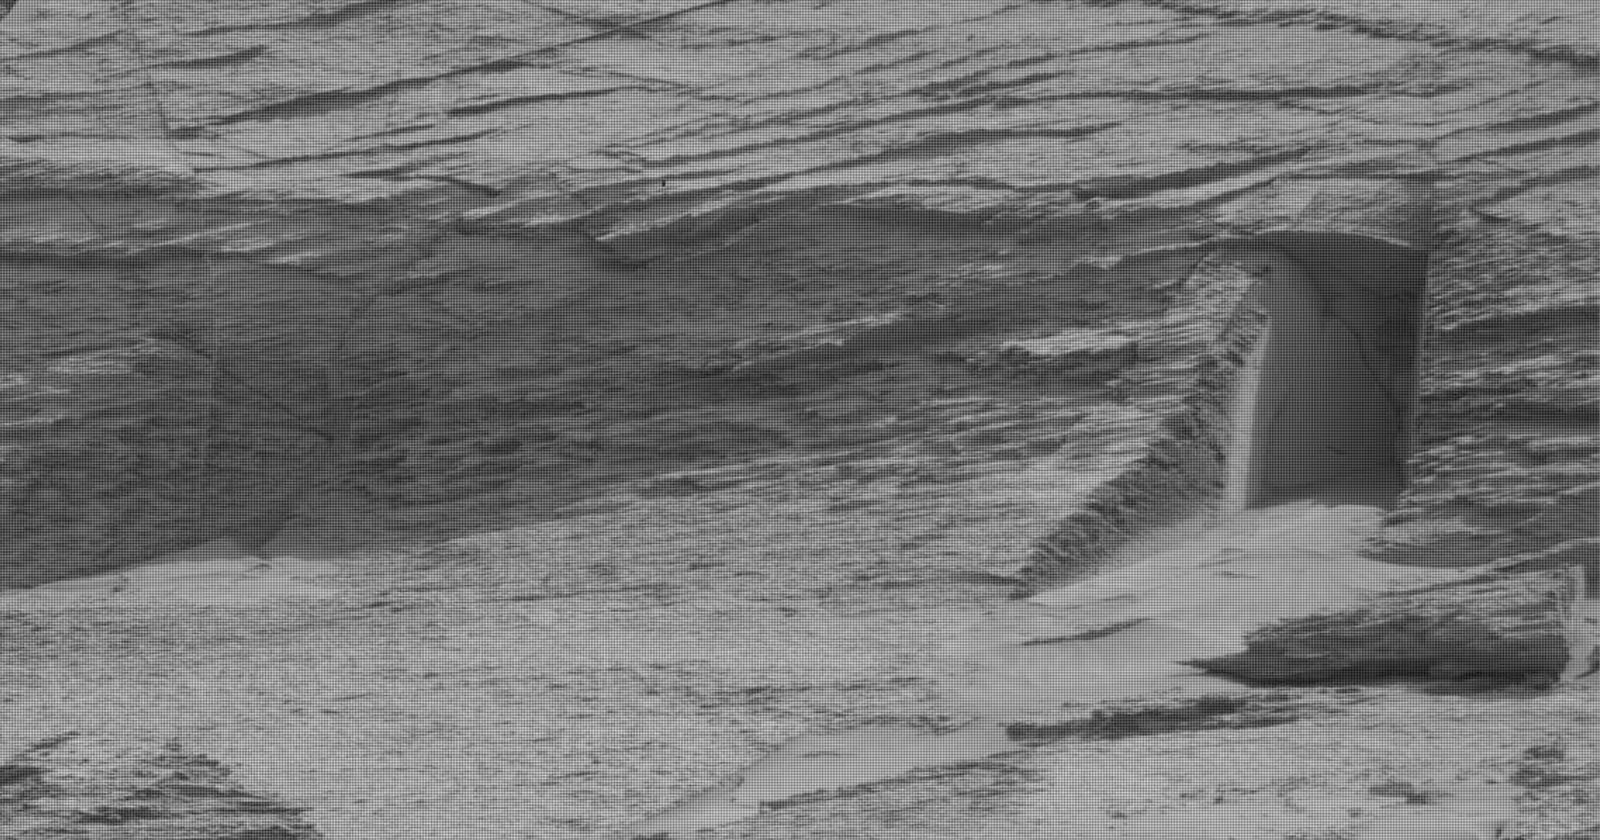 Mars Curiosity Rover Snaps Photo of Doorway on Mars